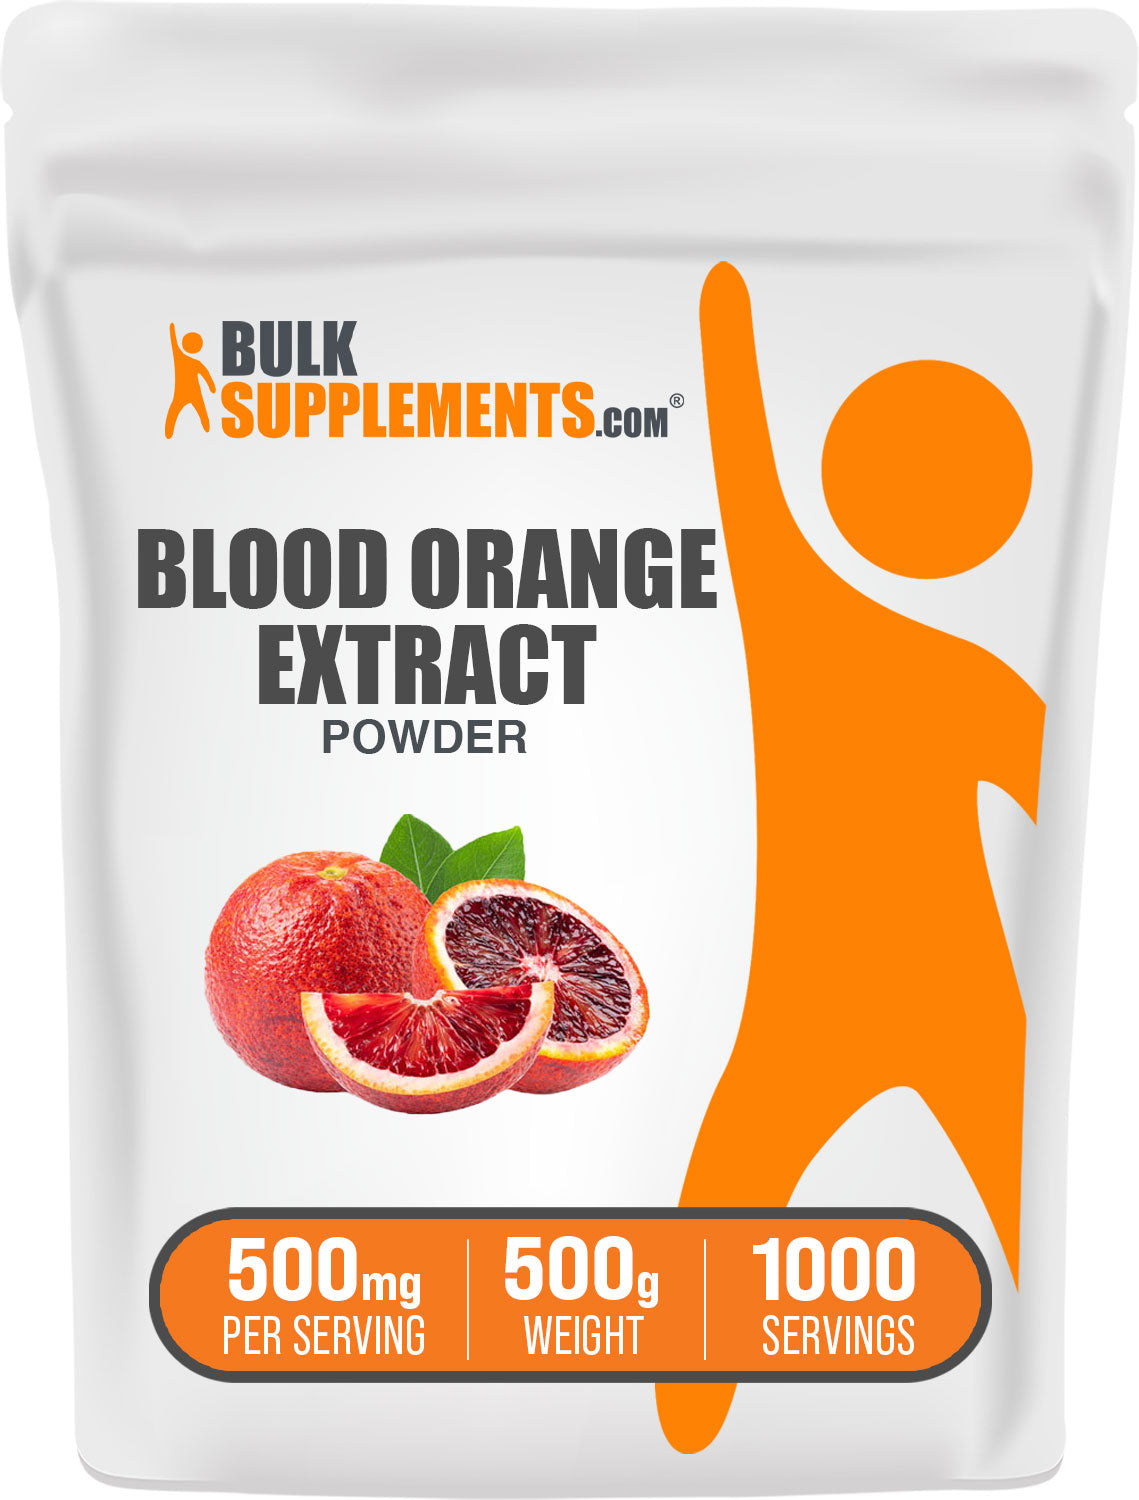 500g of Blood Orange Extract Powder